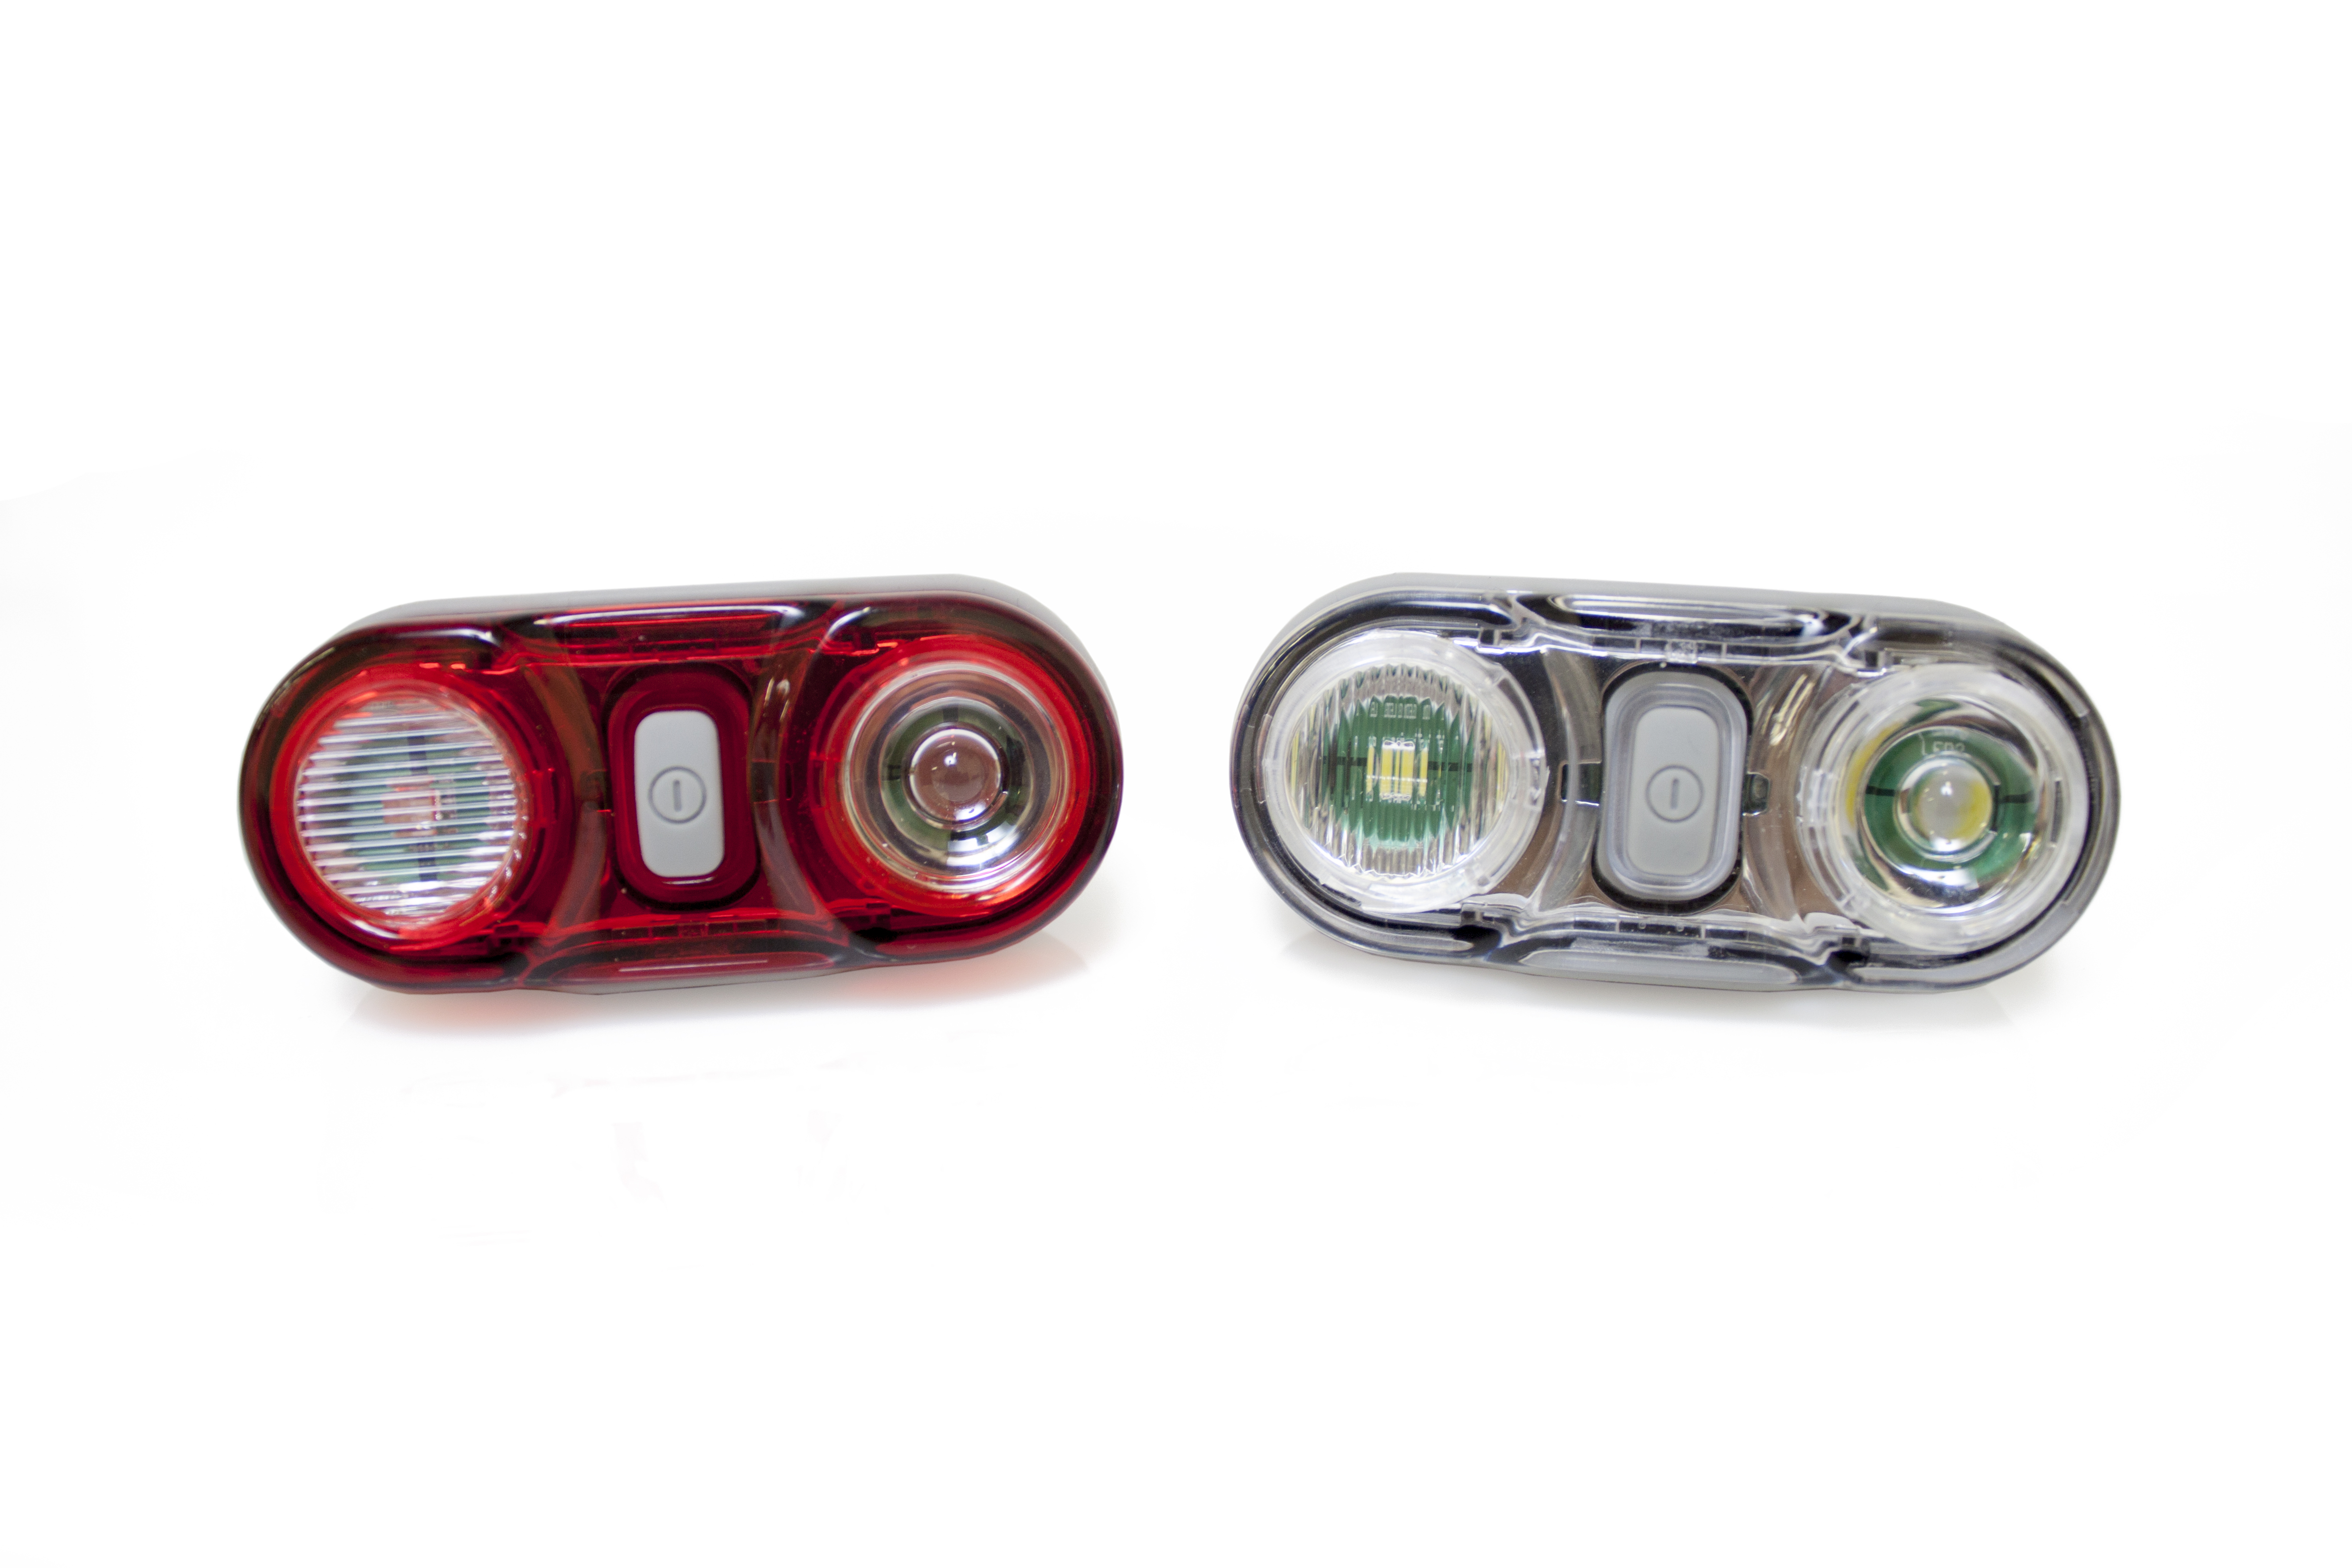 LED Safety Magnet Light Reflective Strobe Running Walking Popular Bike W1C8 